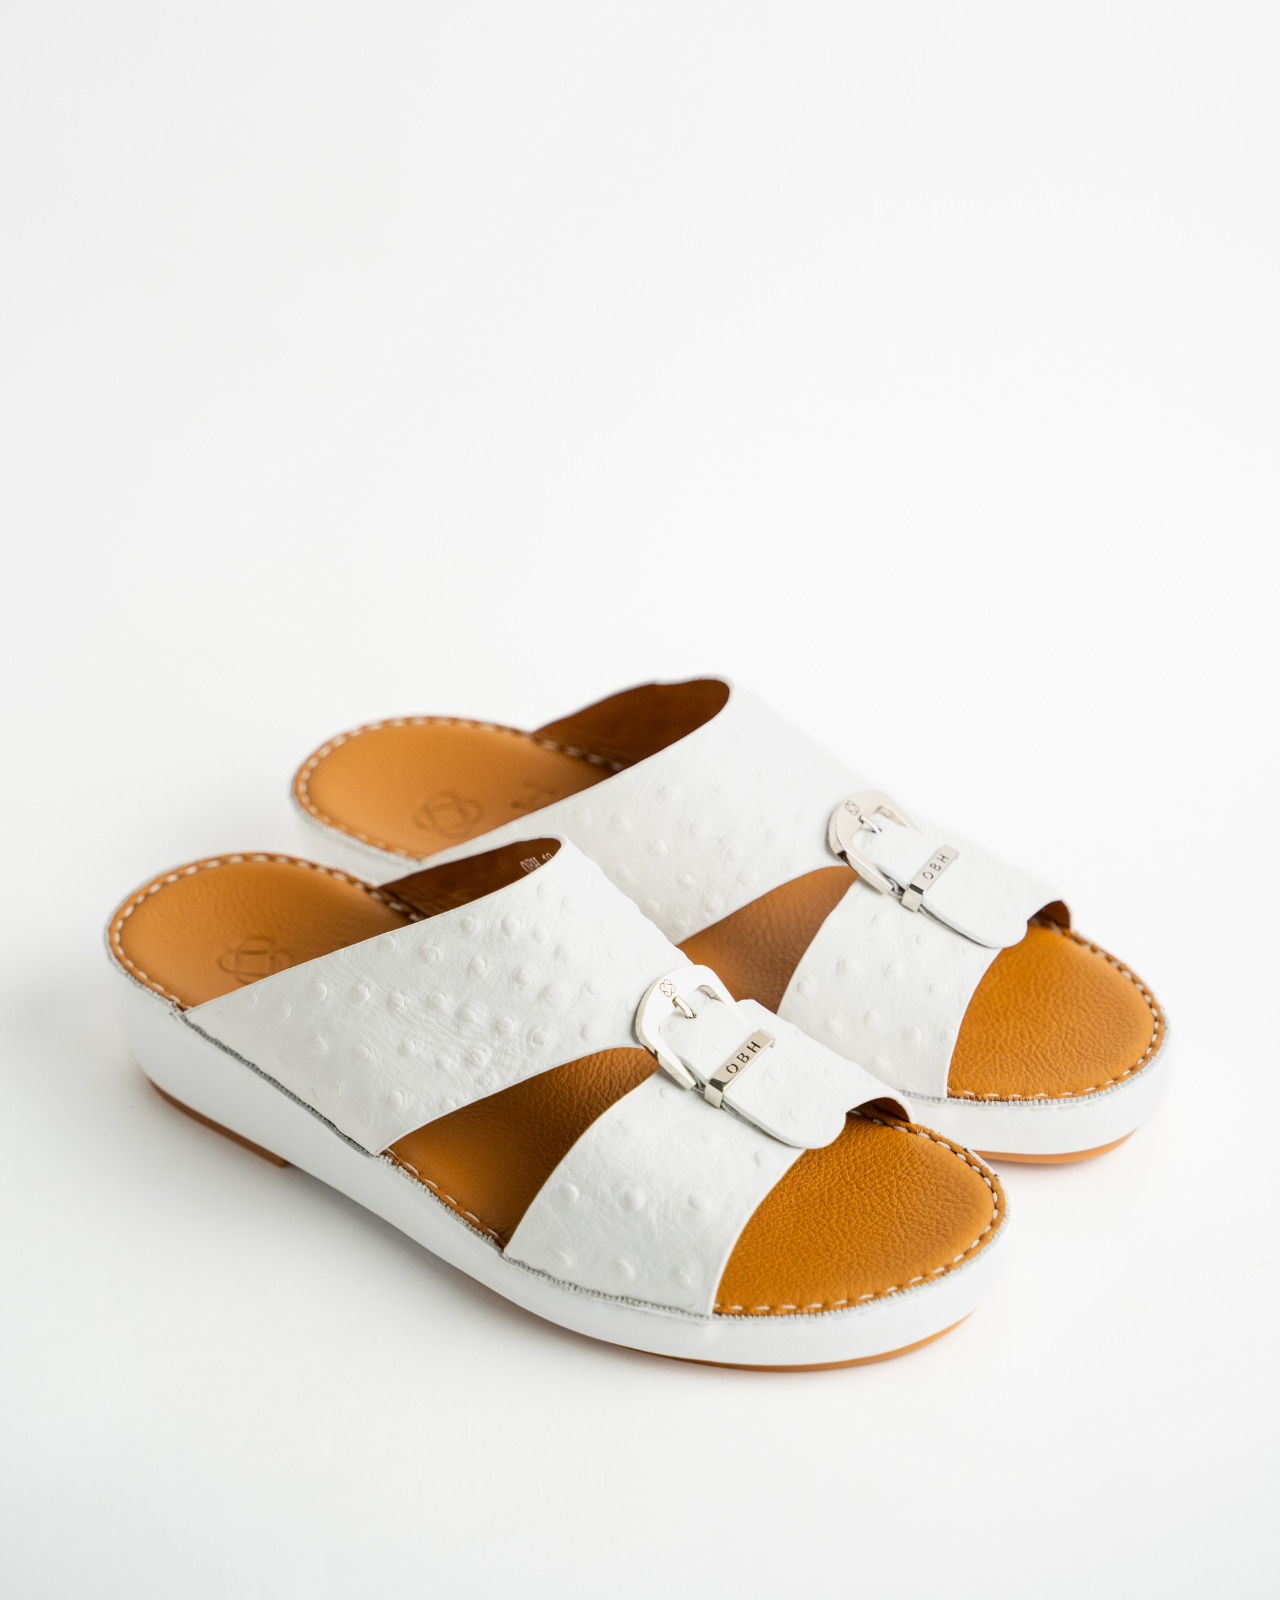 Buy OBH Men Sandals Model 19 white Color Online in UAE | OBH Collection